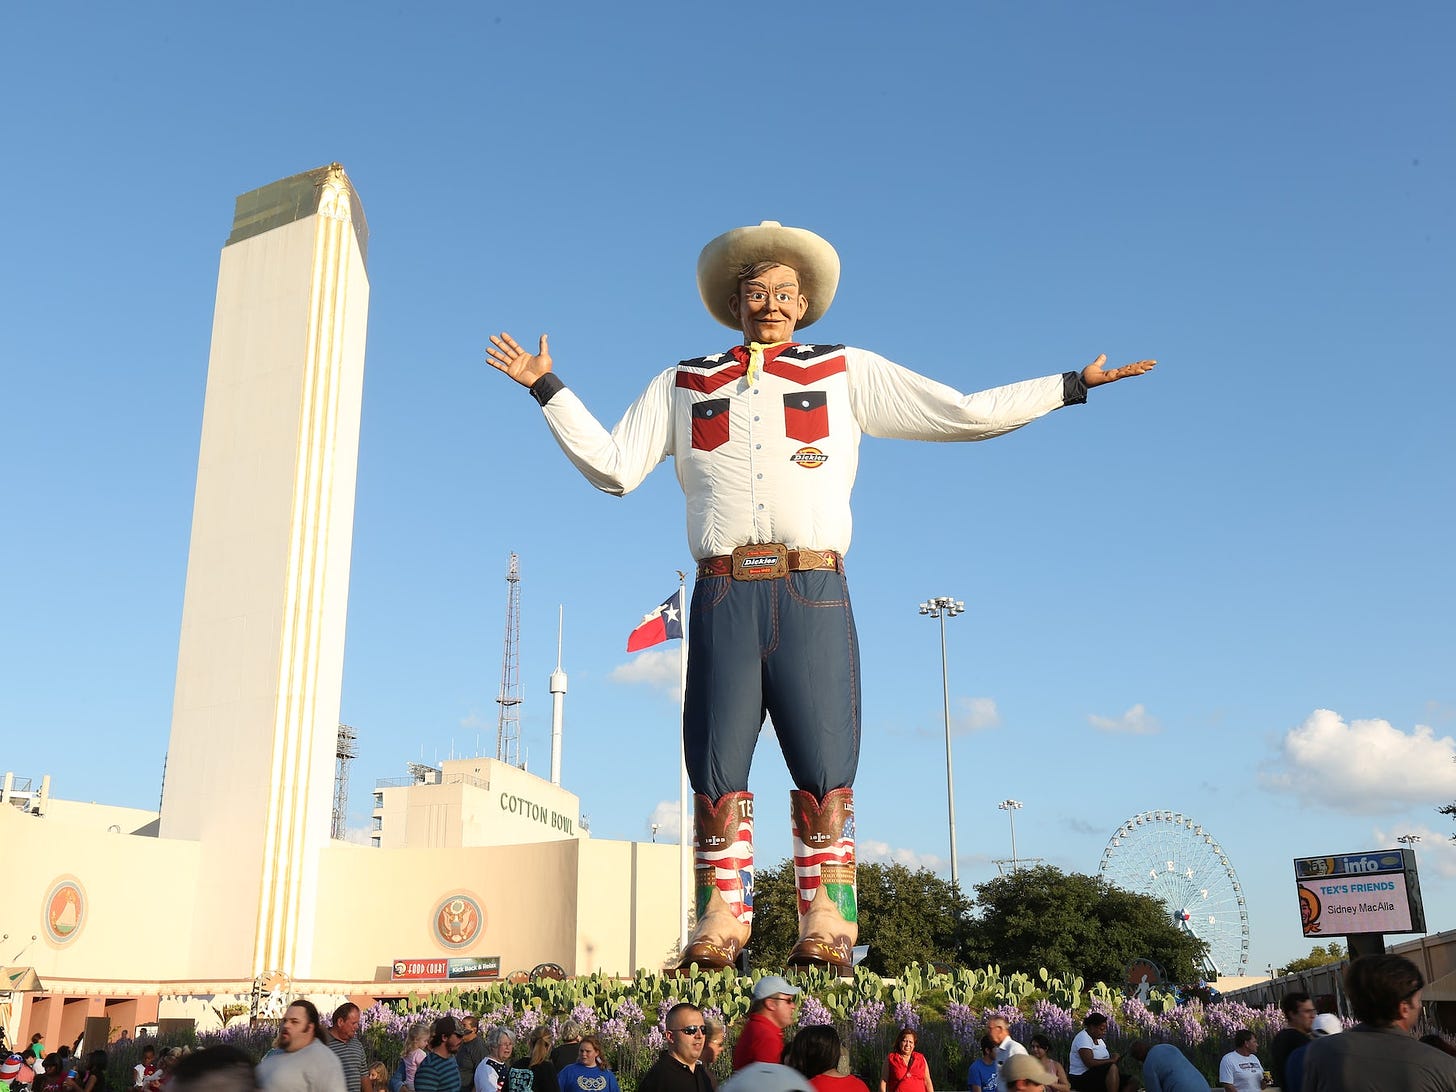 Texas Heritage in Dallas: Check These Big, Bold Venues